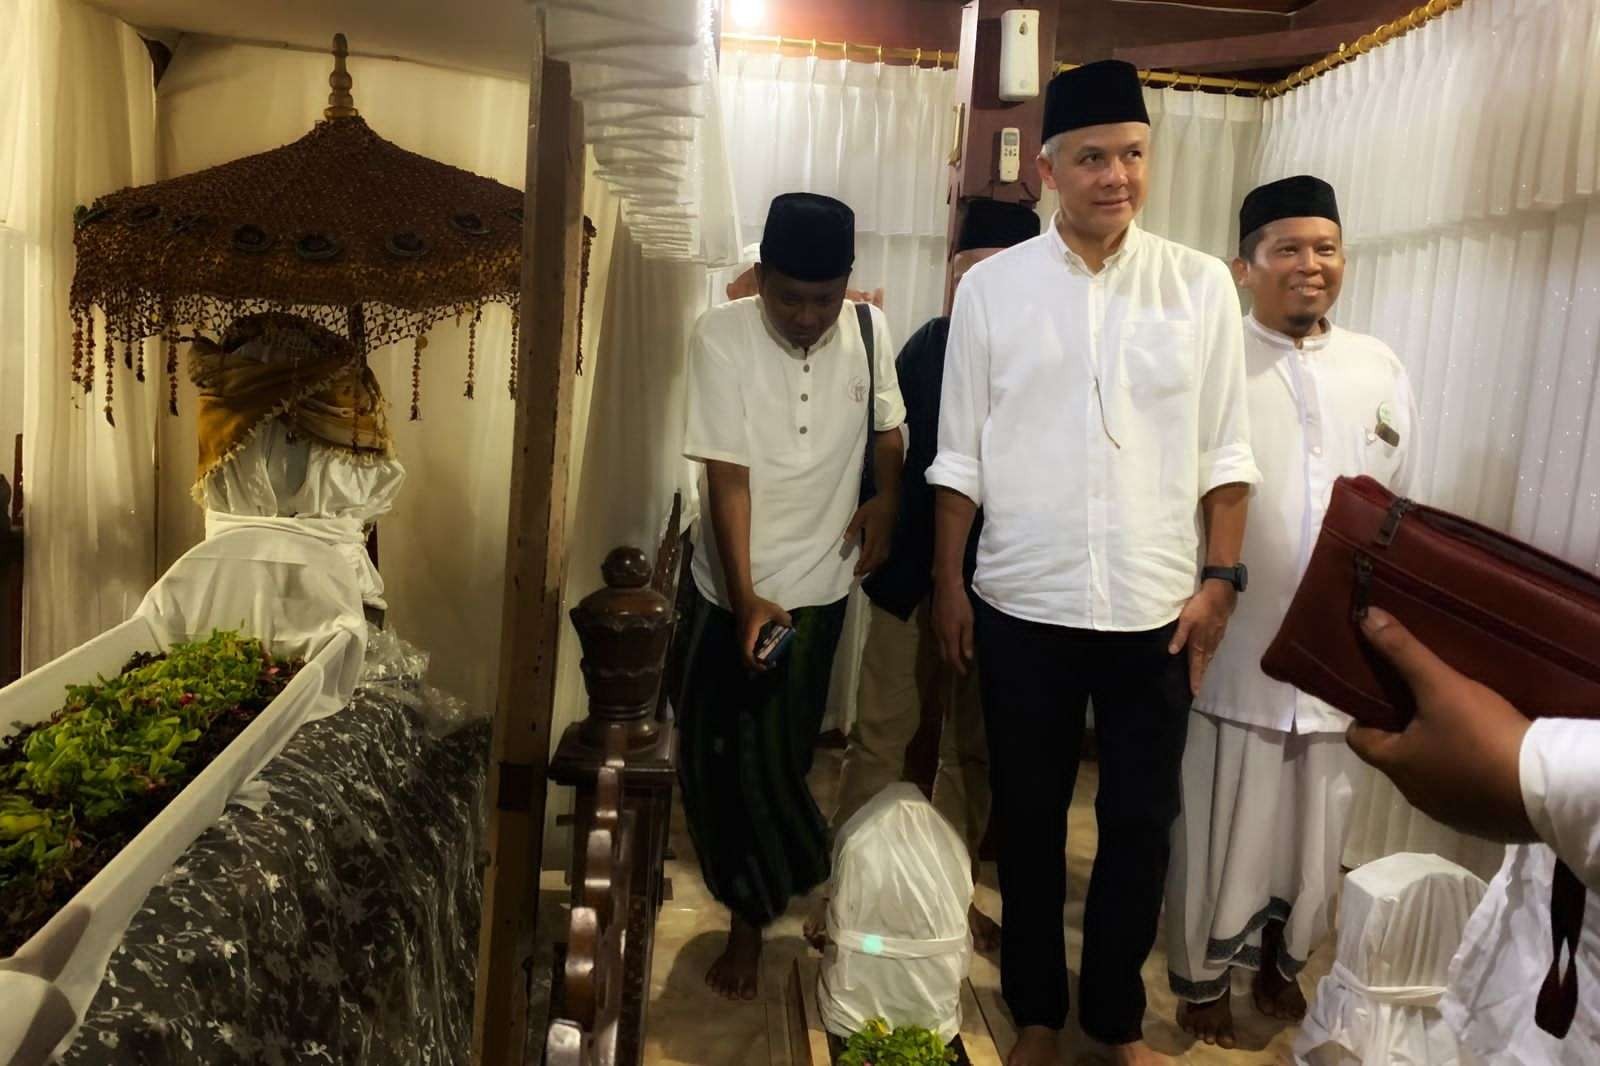 Gubernur Jawa Tengah, Ganjar Pranowo, yang berziarah ke makam wali sembilan, salah satunya makam Sunan Drajat di Lamongan, Jawa Timur. (Foto: Dokumentasi Jawa Tengah)